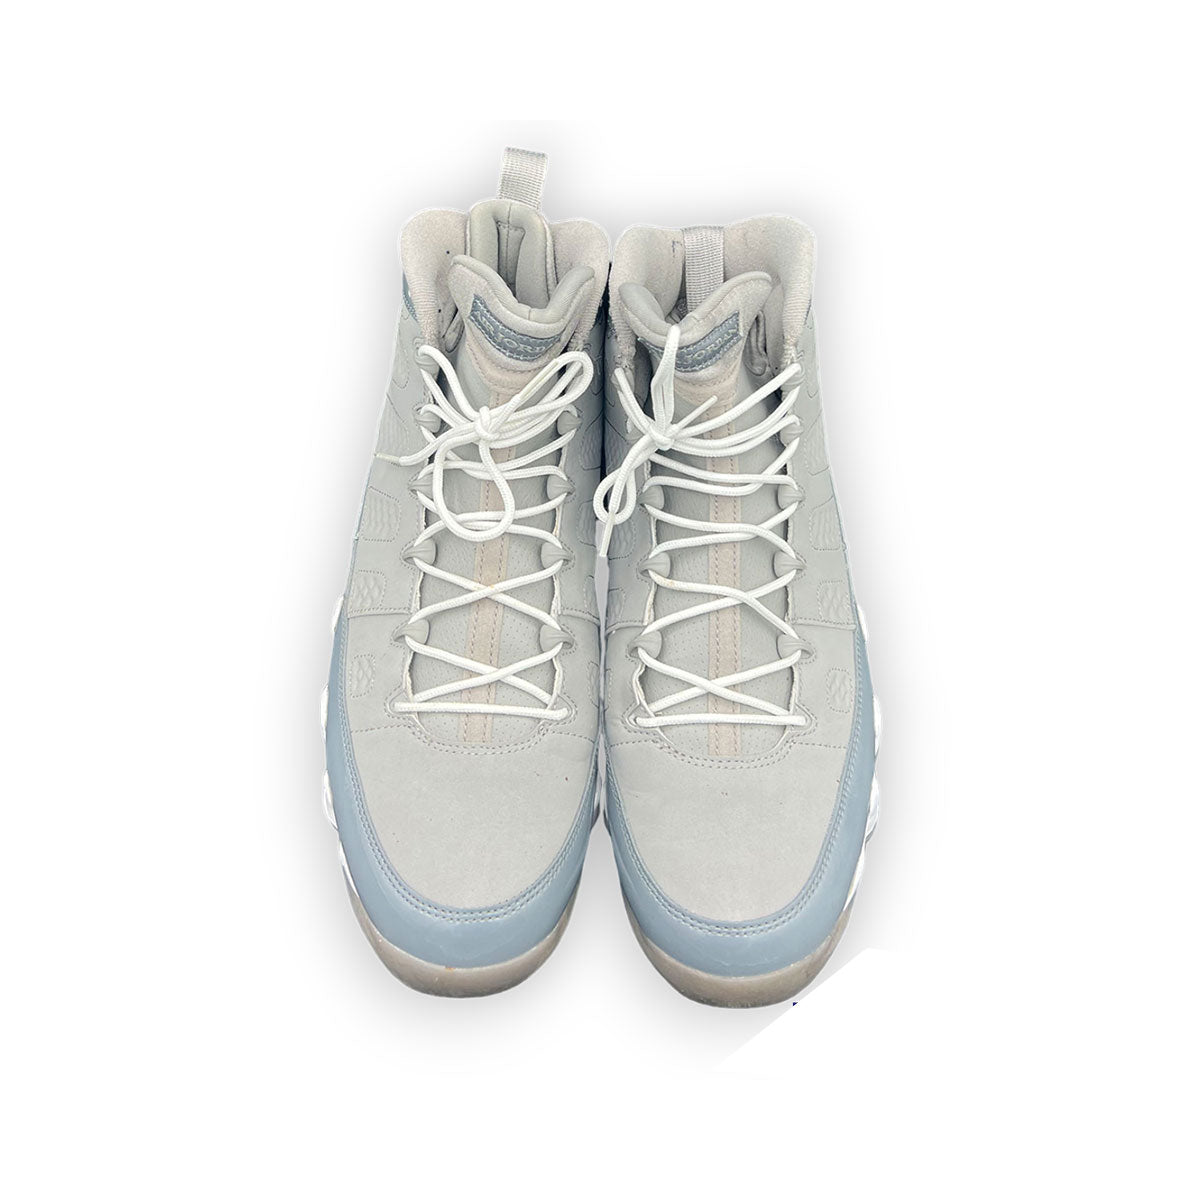 Air Jordan 9 Retro "Cool Grey" 2012 size 13 (Pre-Owned) - KickzStore